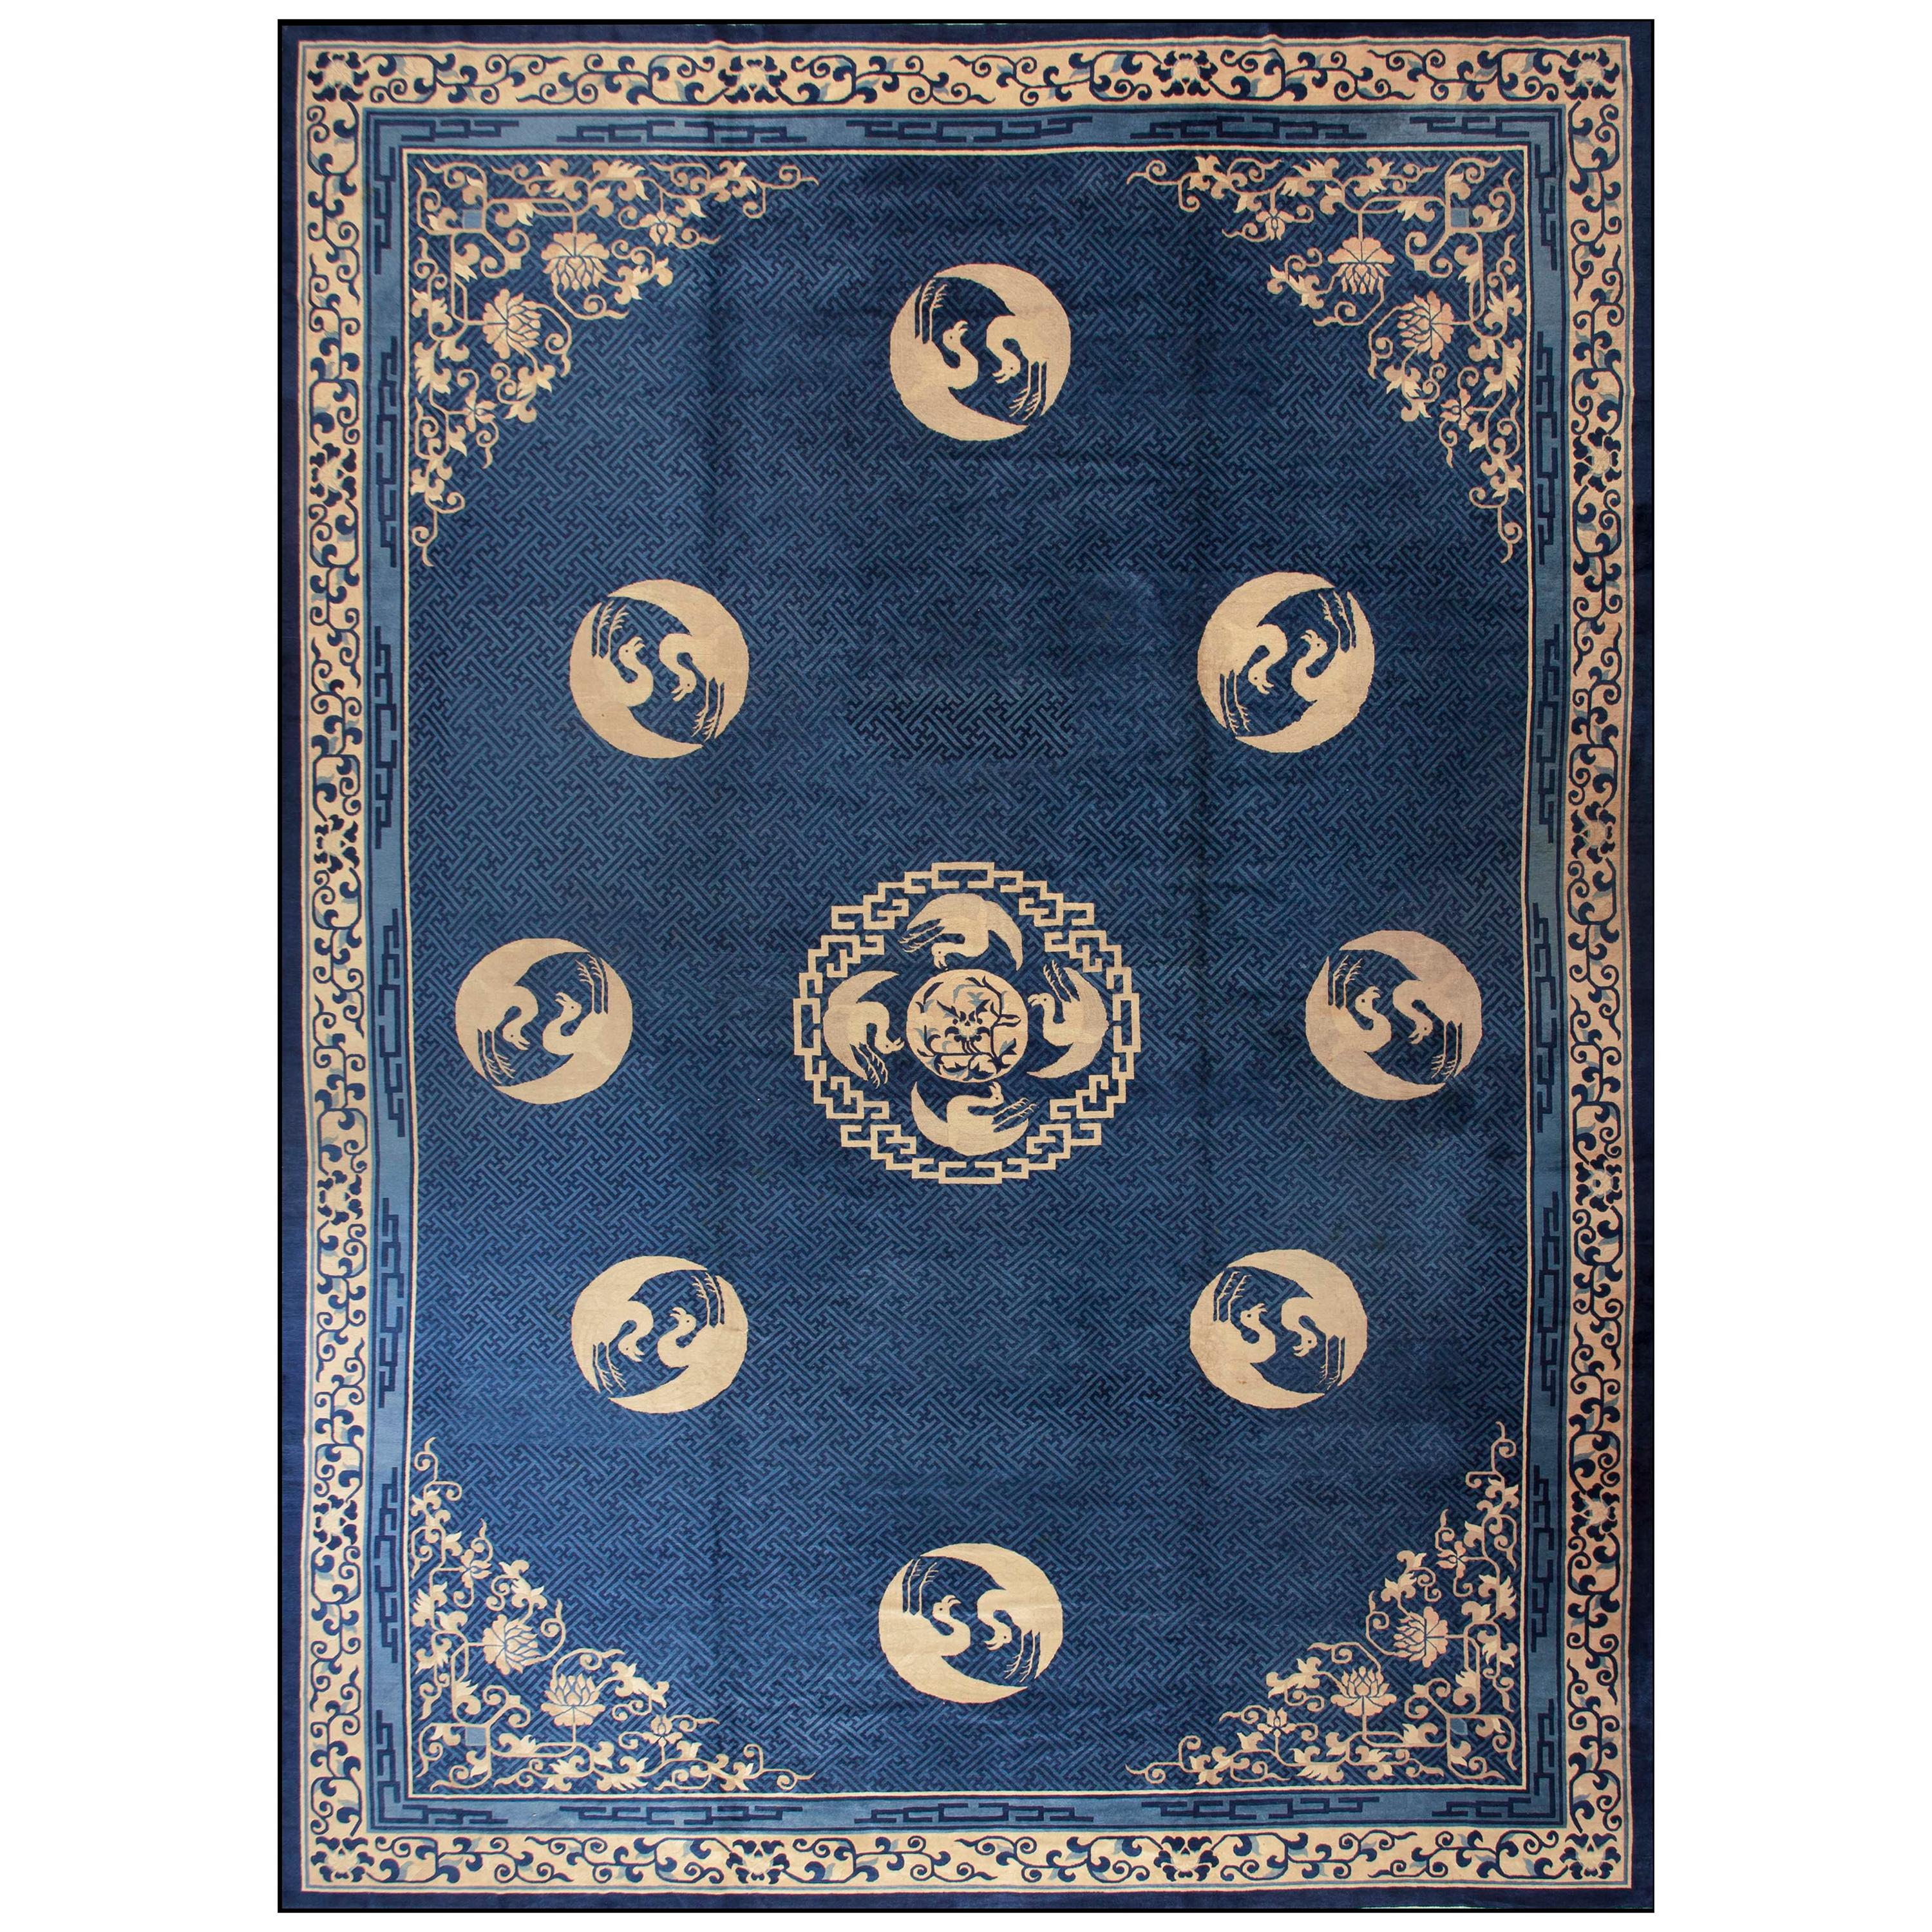 19th Century Chinese Peking Carpet ( 14' x 19'3" - 427 x 587 cm ) For Sale